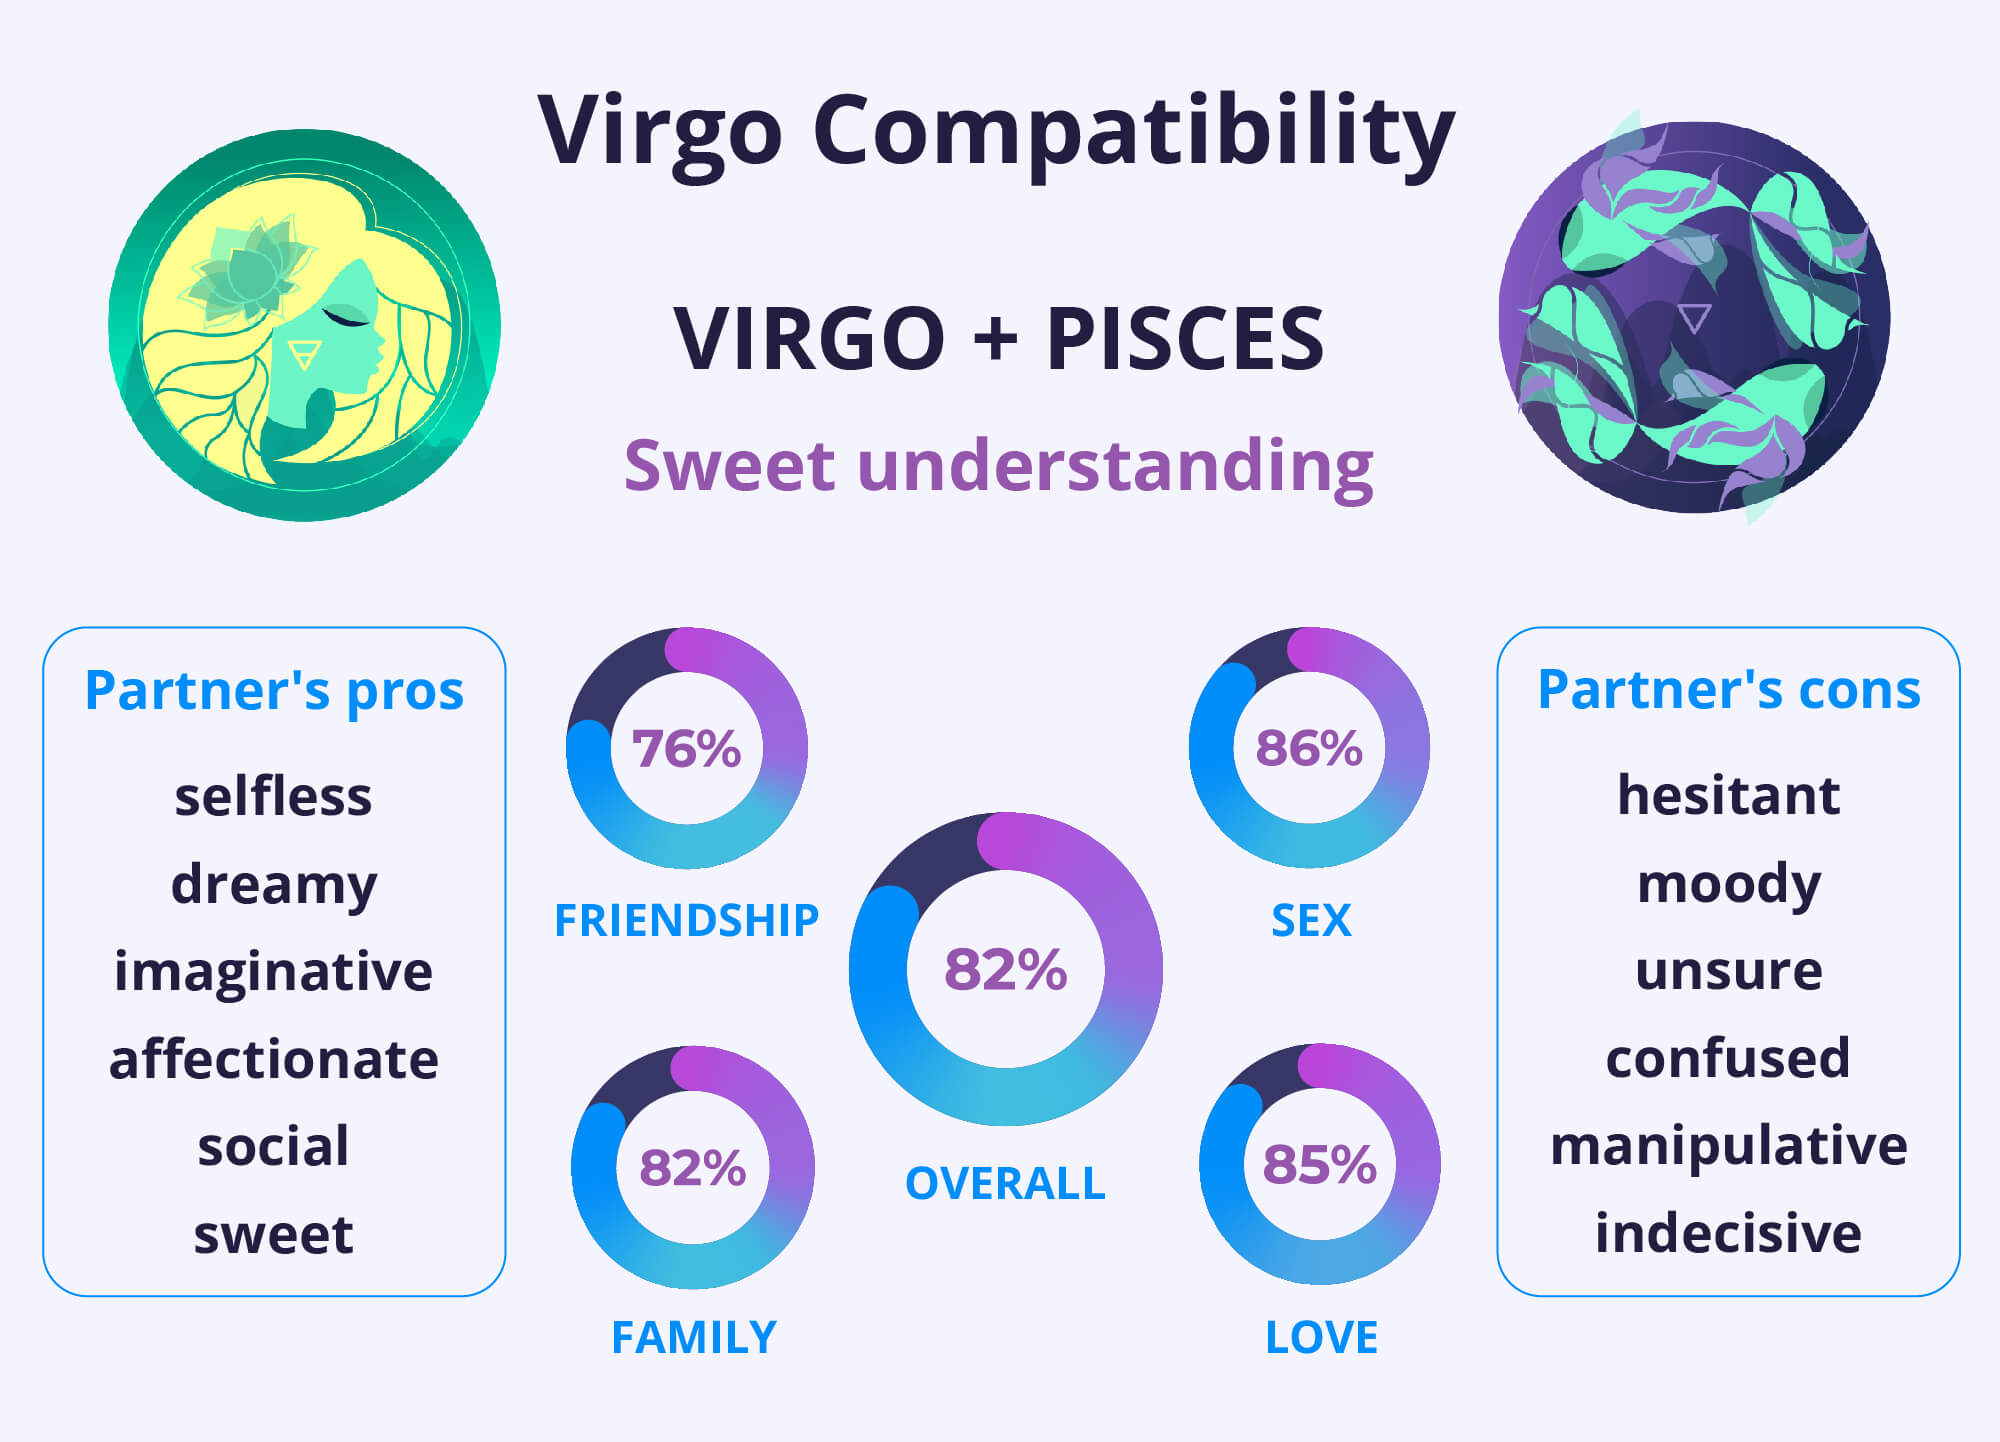 Virgo and Virgo Compatibility Chart